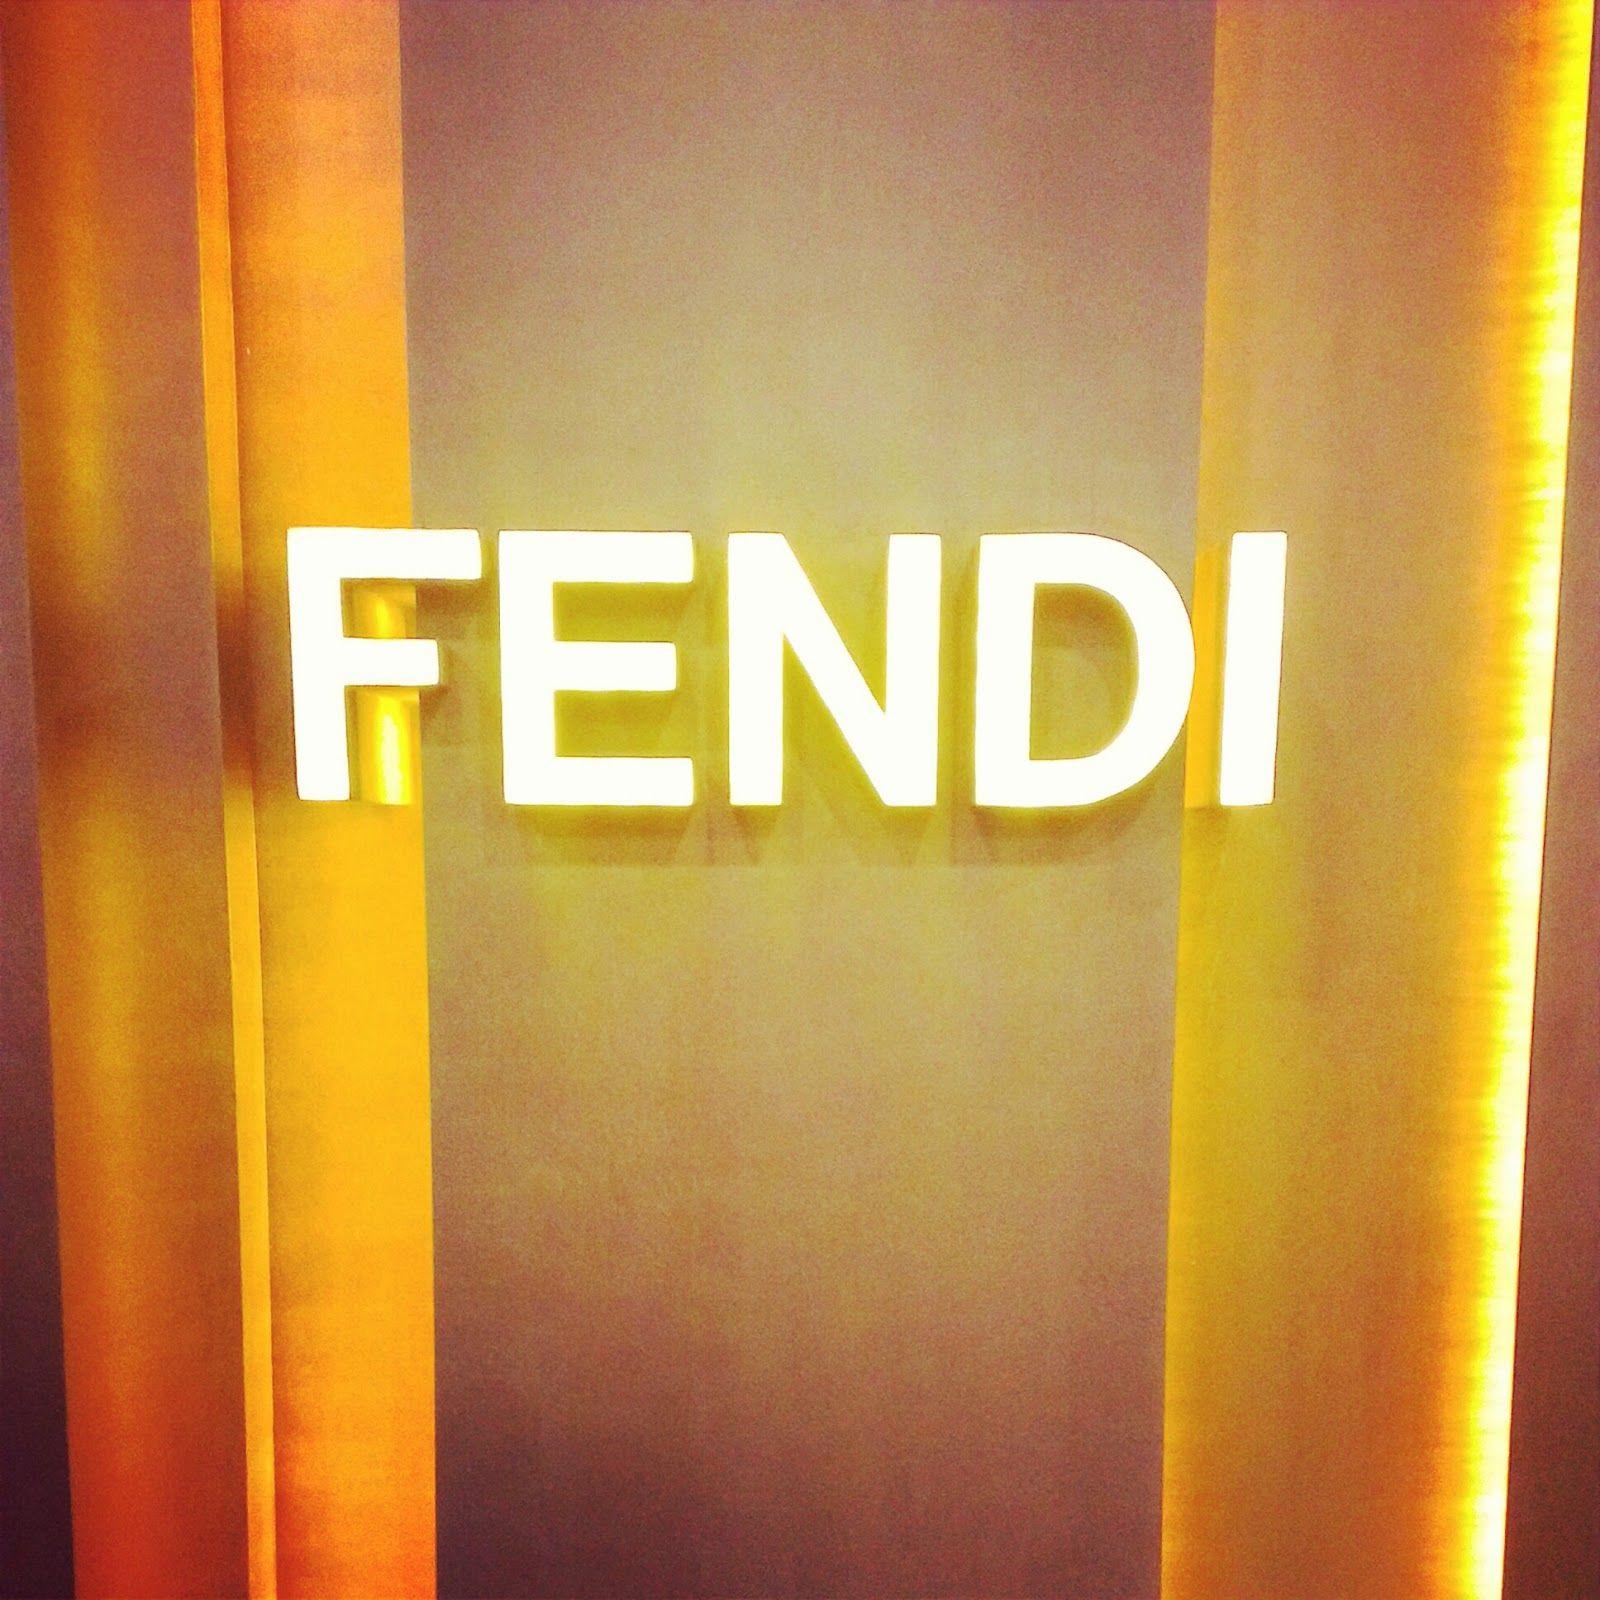 Fendi Wallpapers